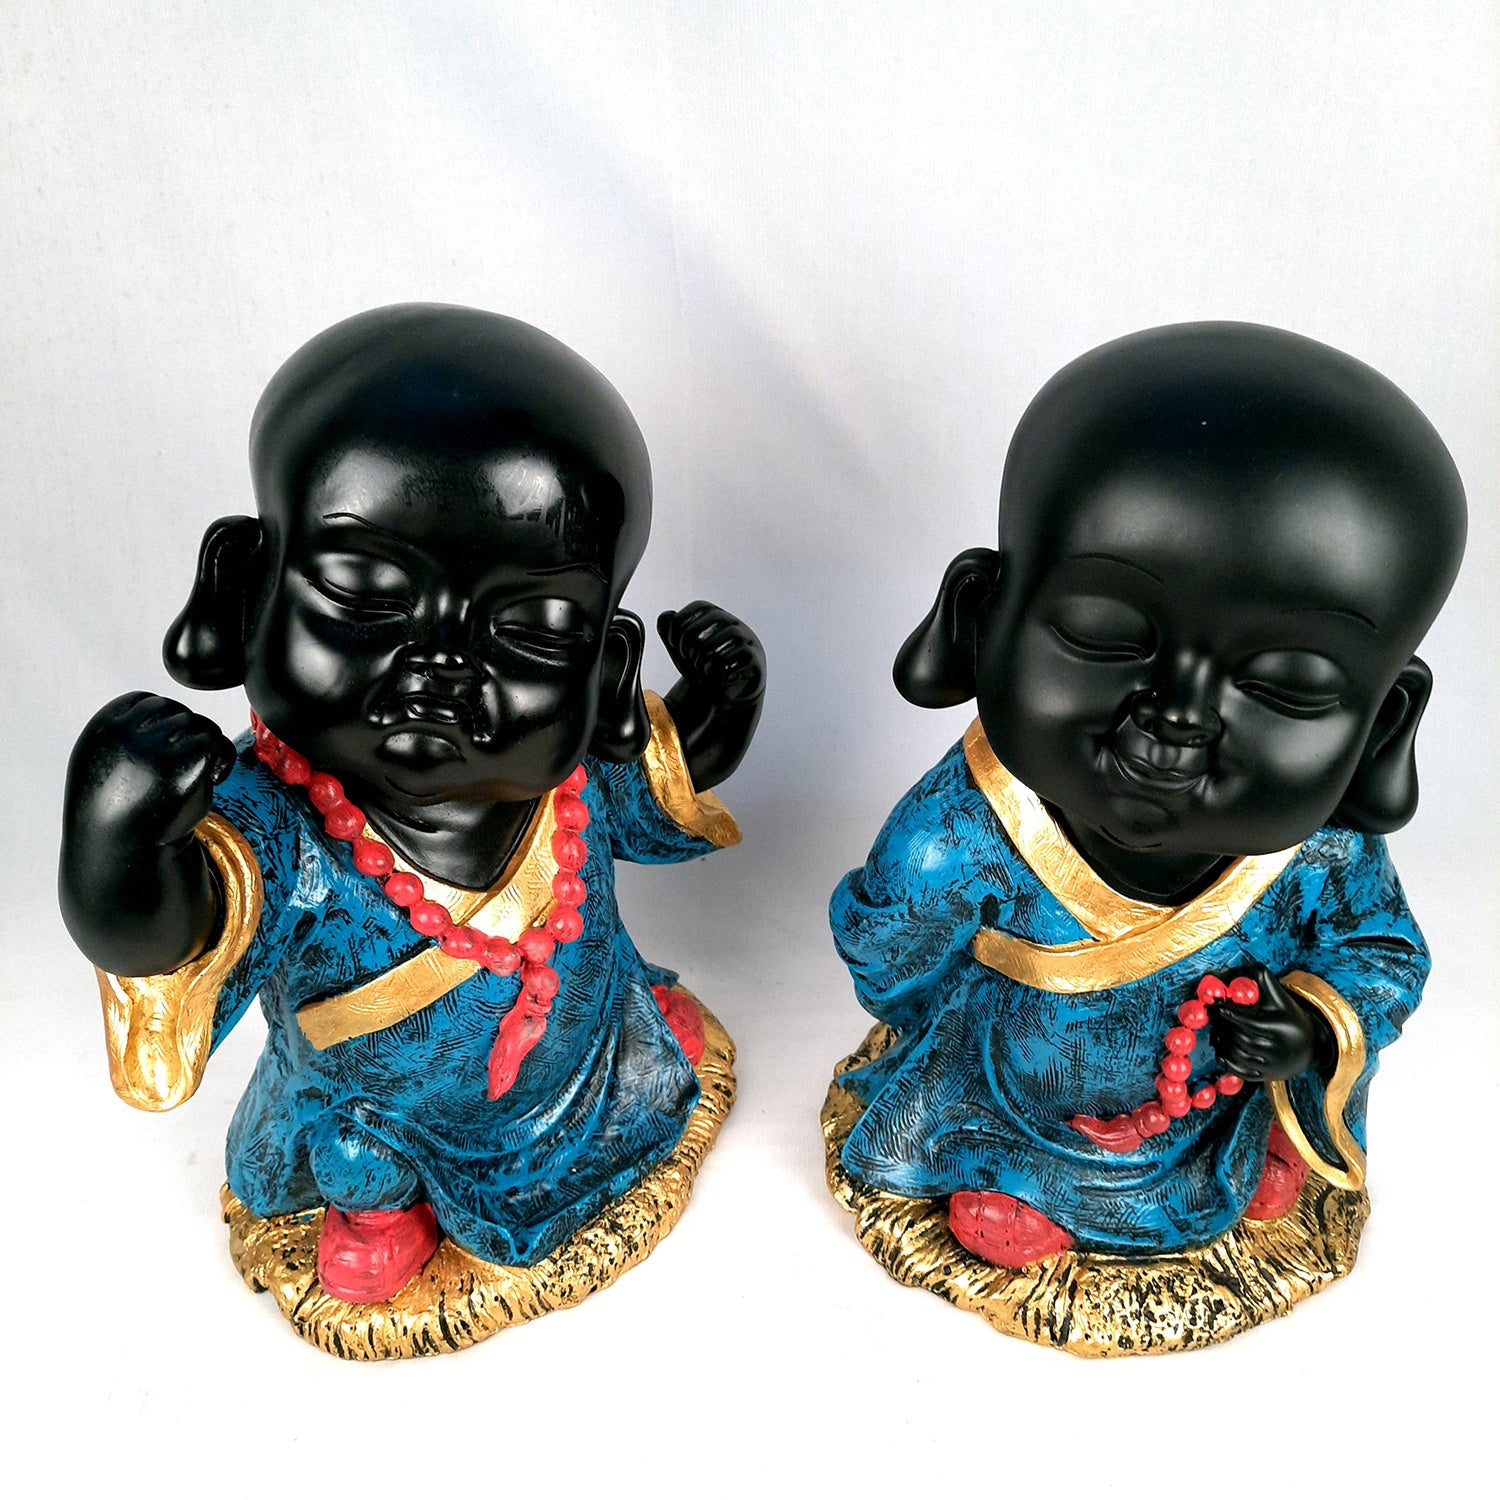 Black Baby Monk Showpiece| Feng Shui Decor - For Good Luck, Home, Table, Office Decor & Gift-13 inch (Set of 2)- Apkamart